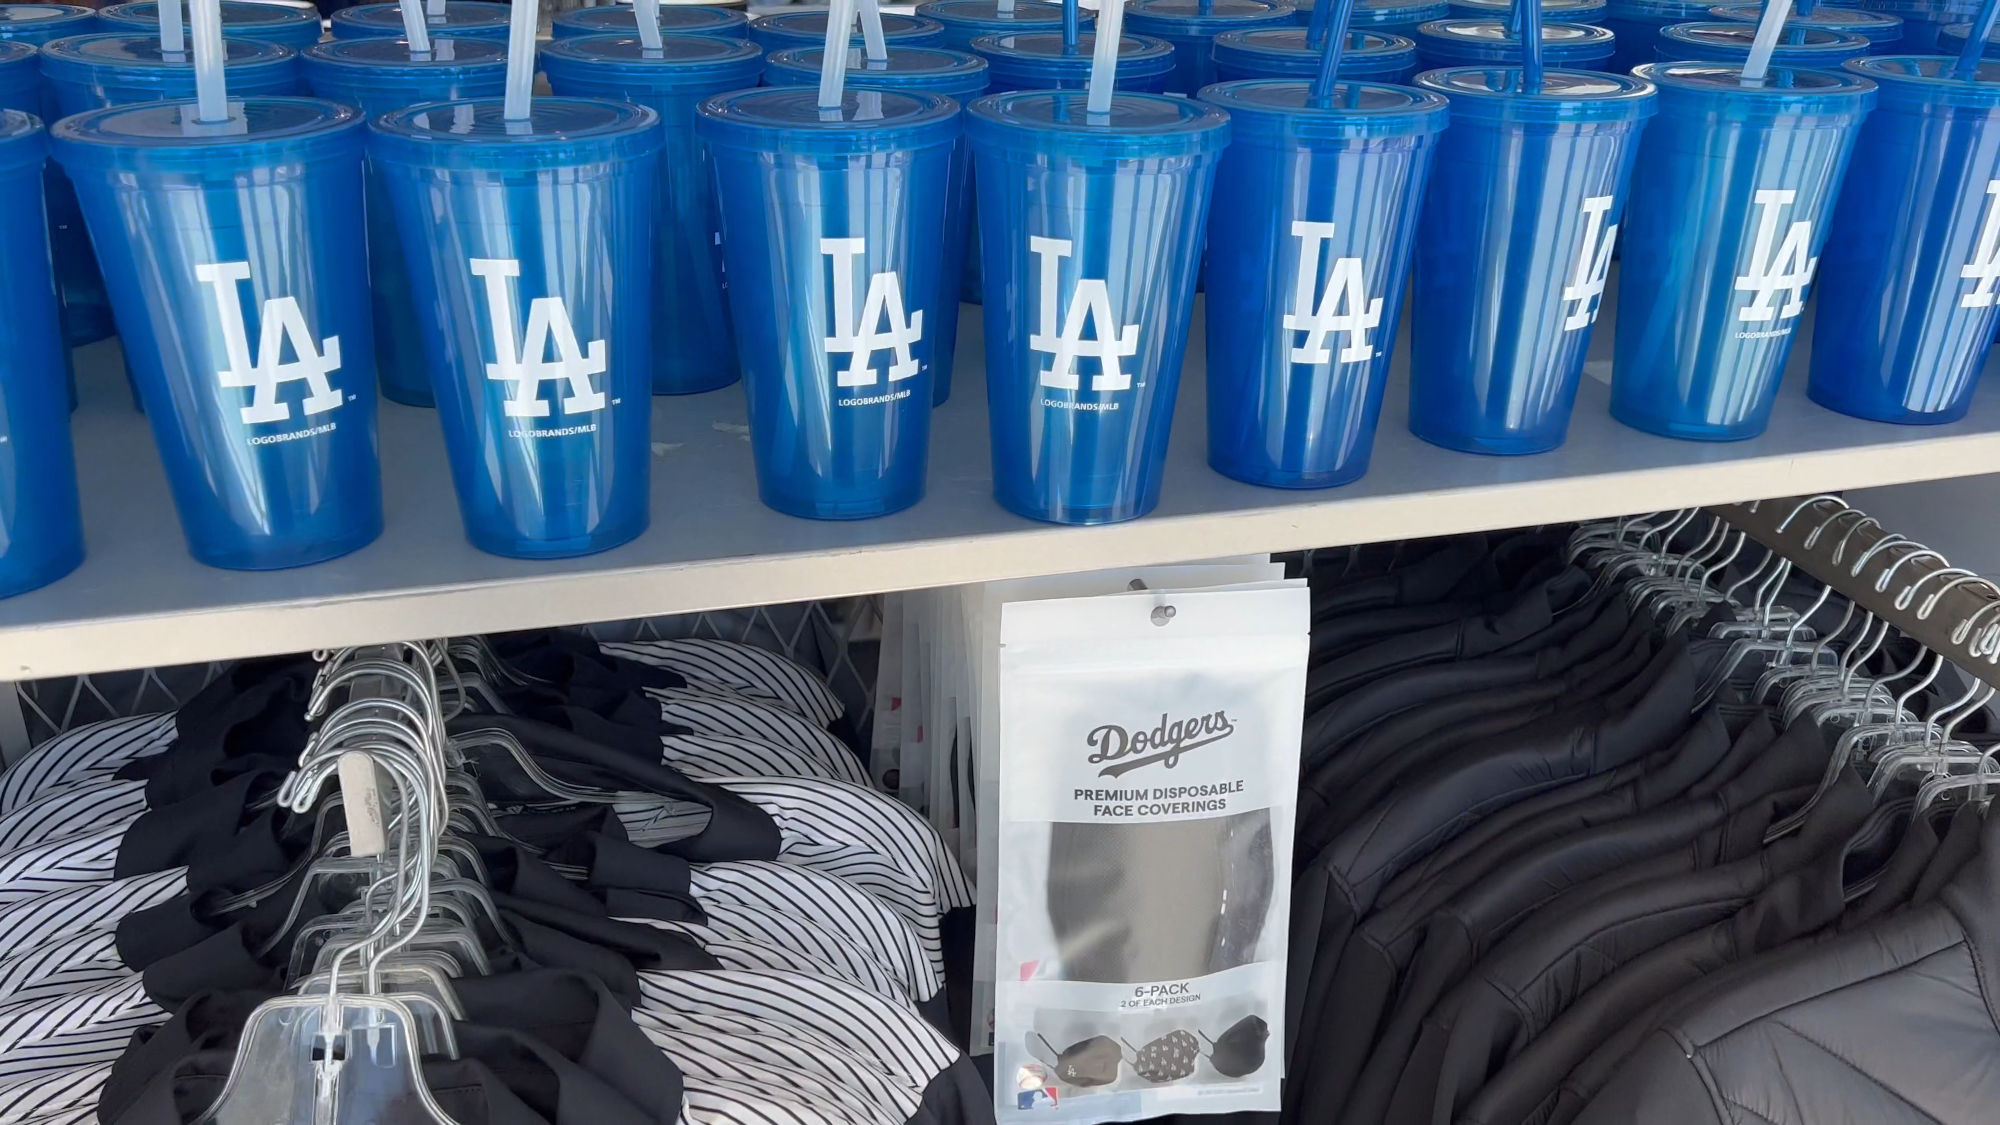 Dodgers LA Cups